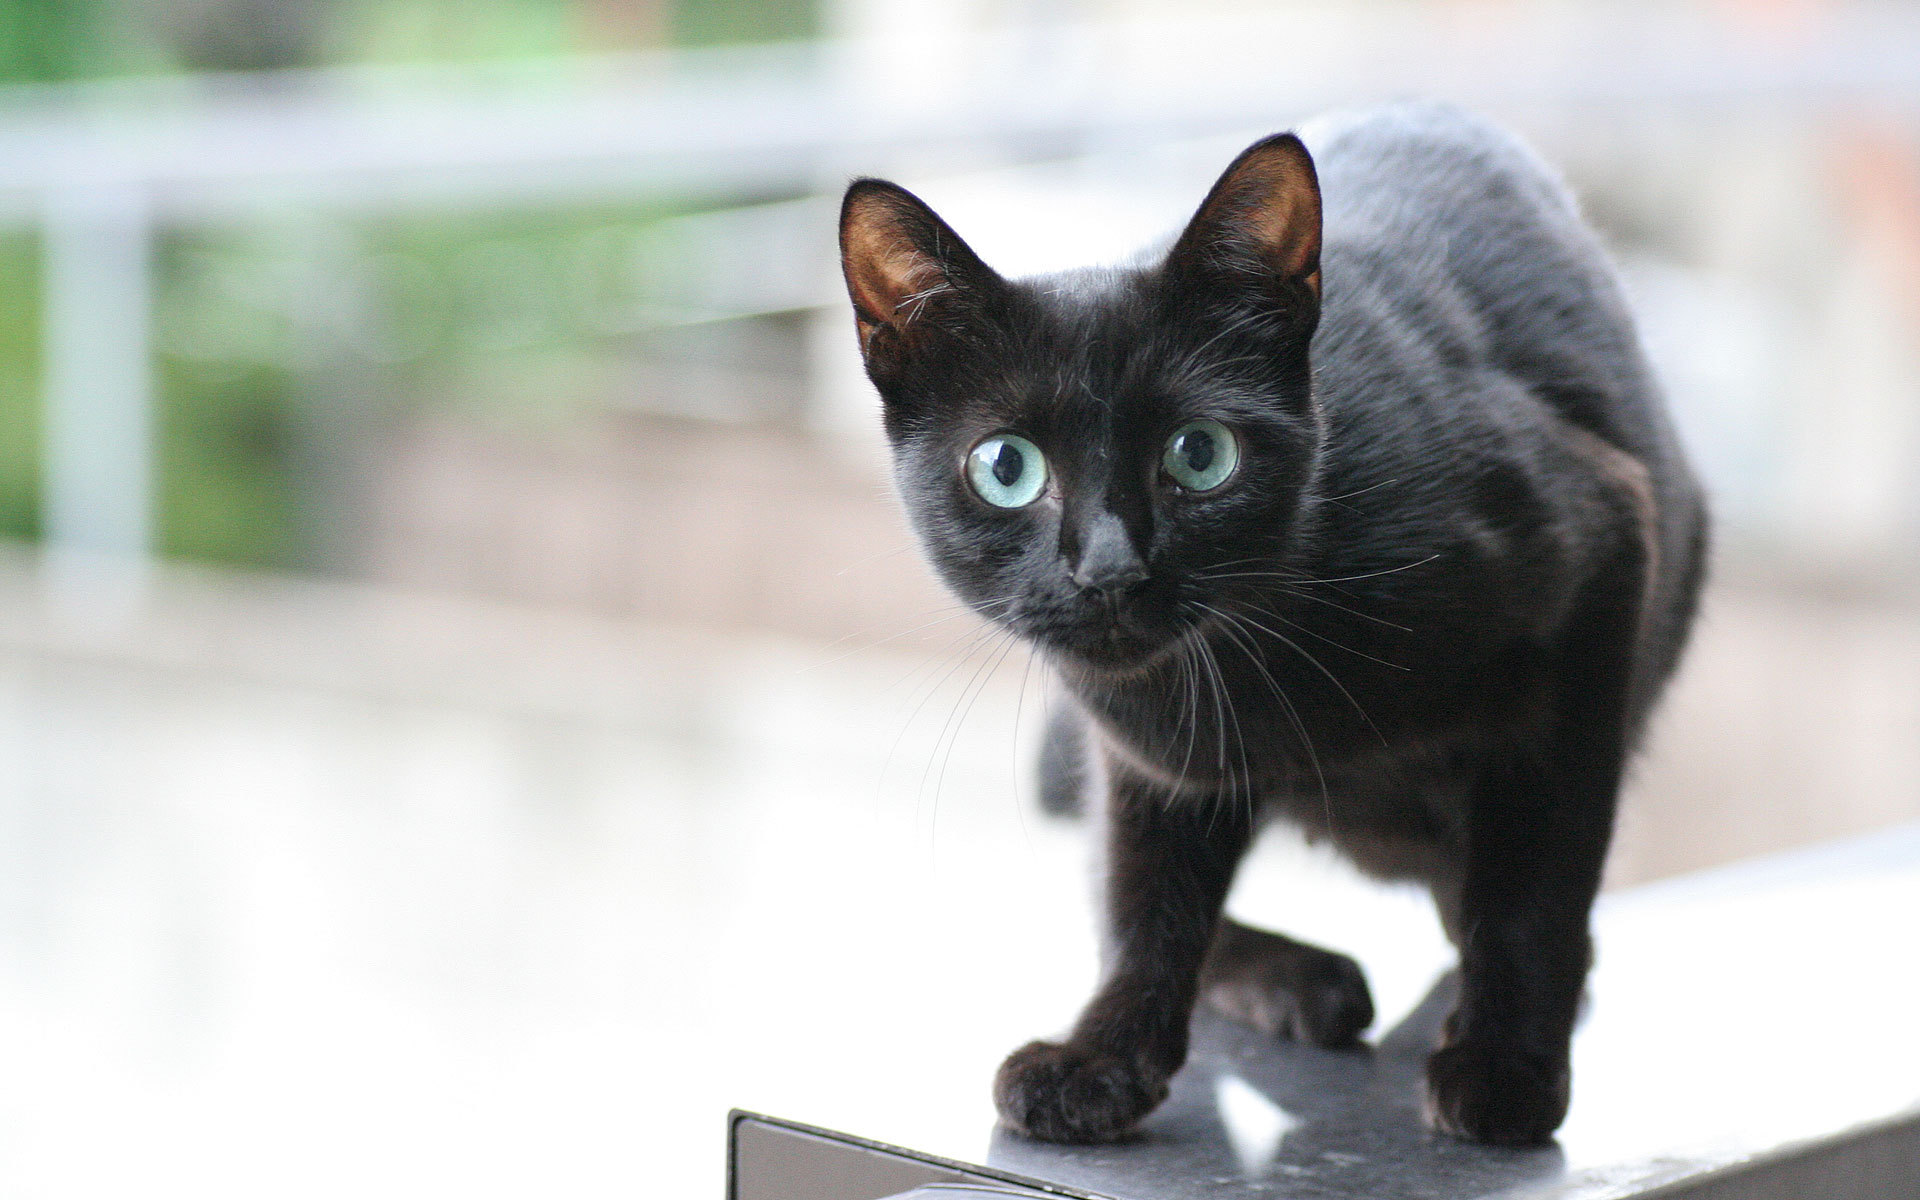 Young black cat from Elmhurst | Elmhurst, IL Patch